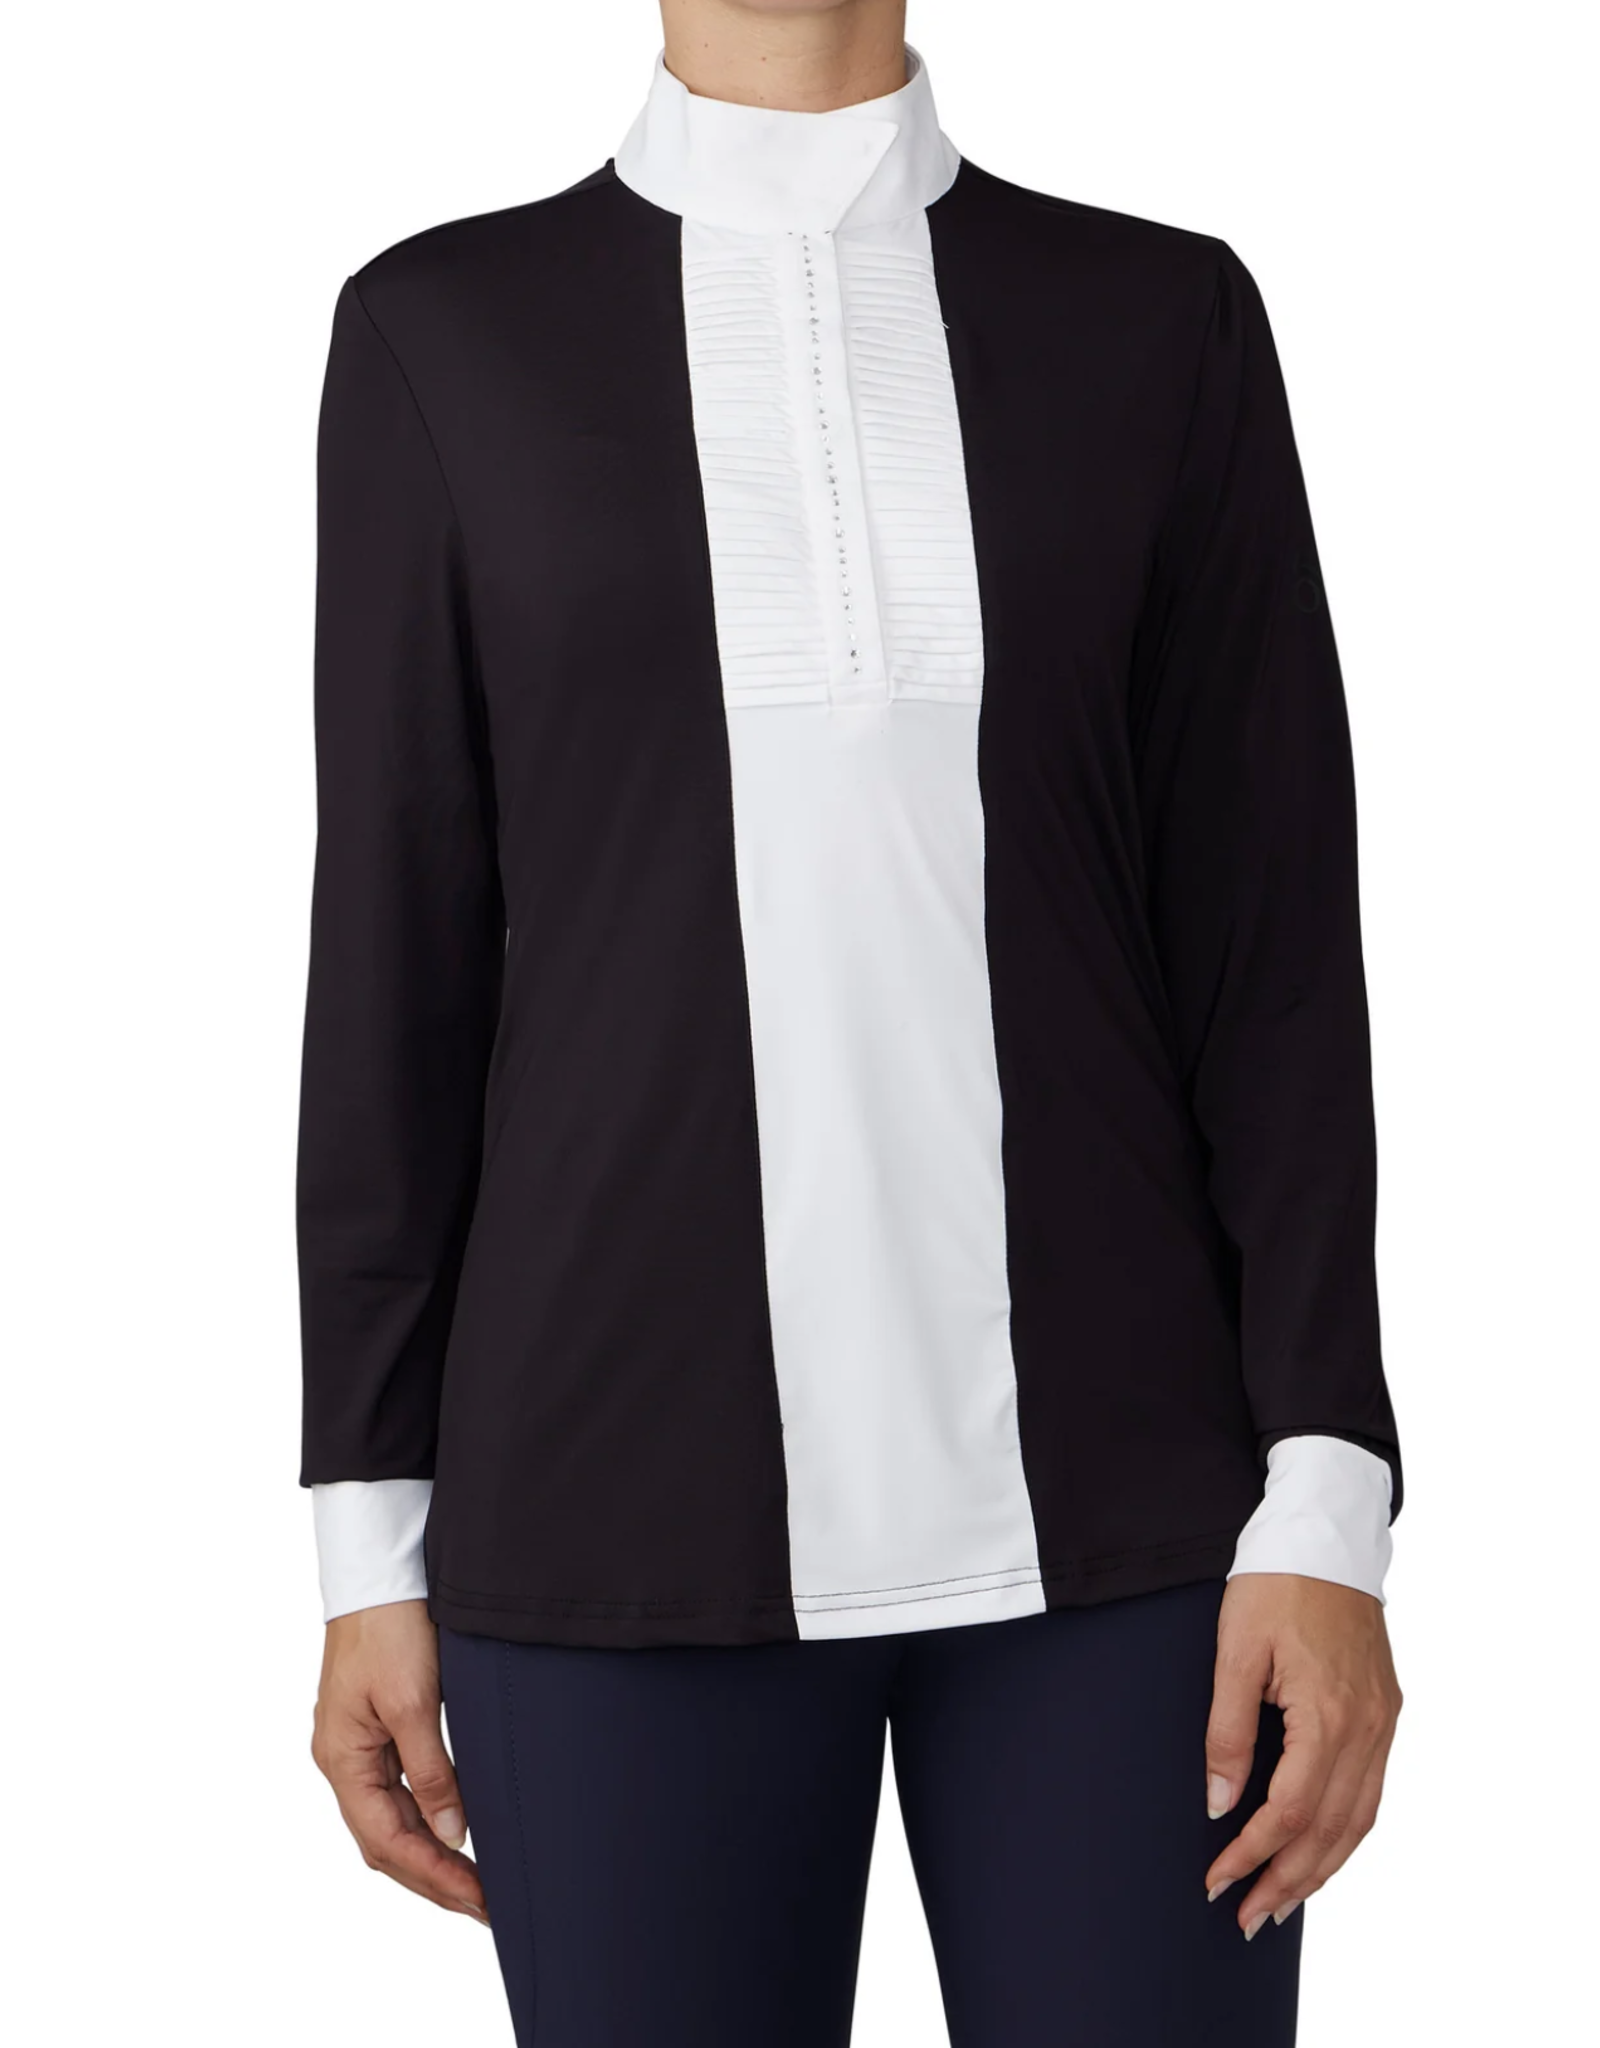 Ovation Ladies' Elegance Grace Long Sleeve Shirt